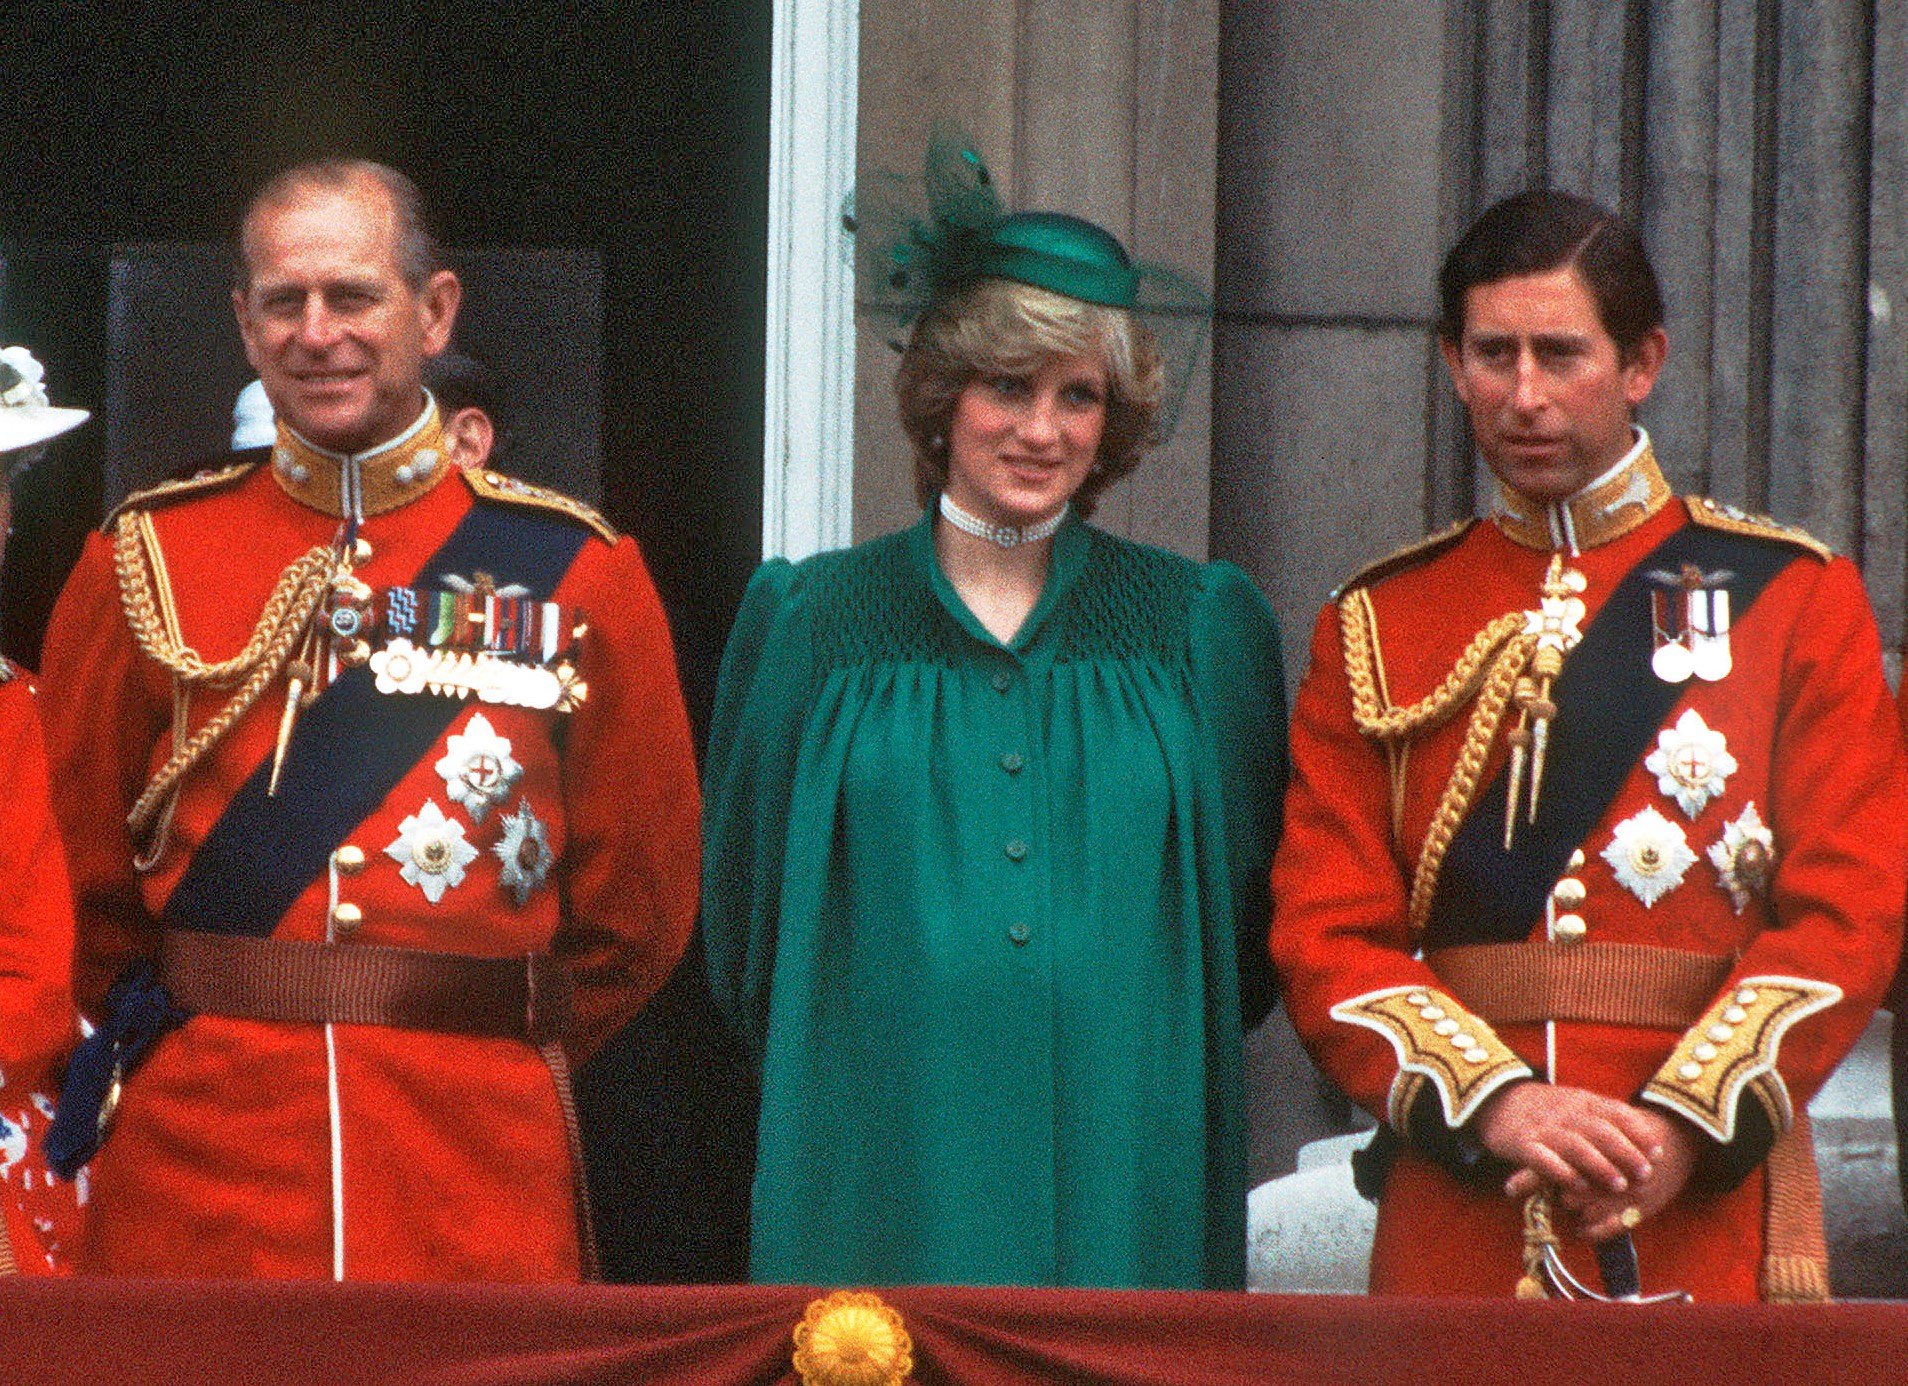 Prince Philip, Princess Diana, and Prince Charles